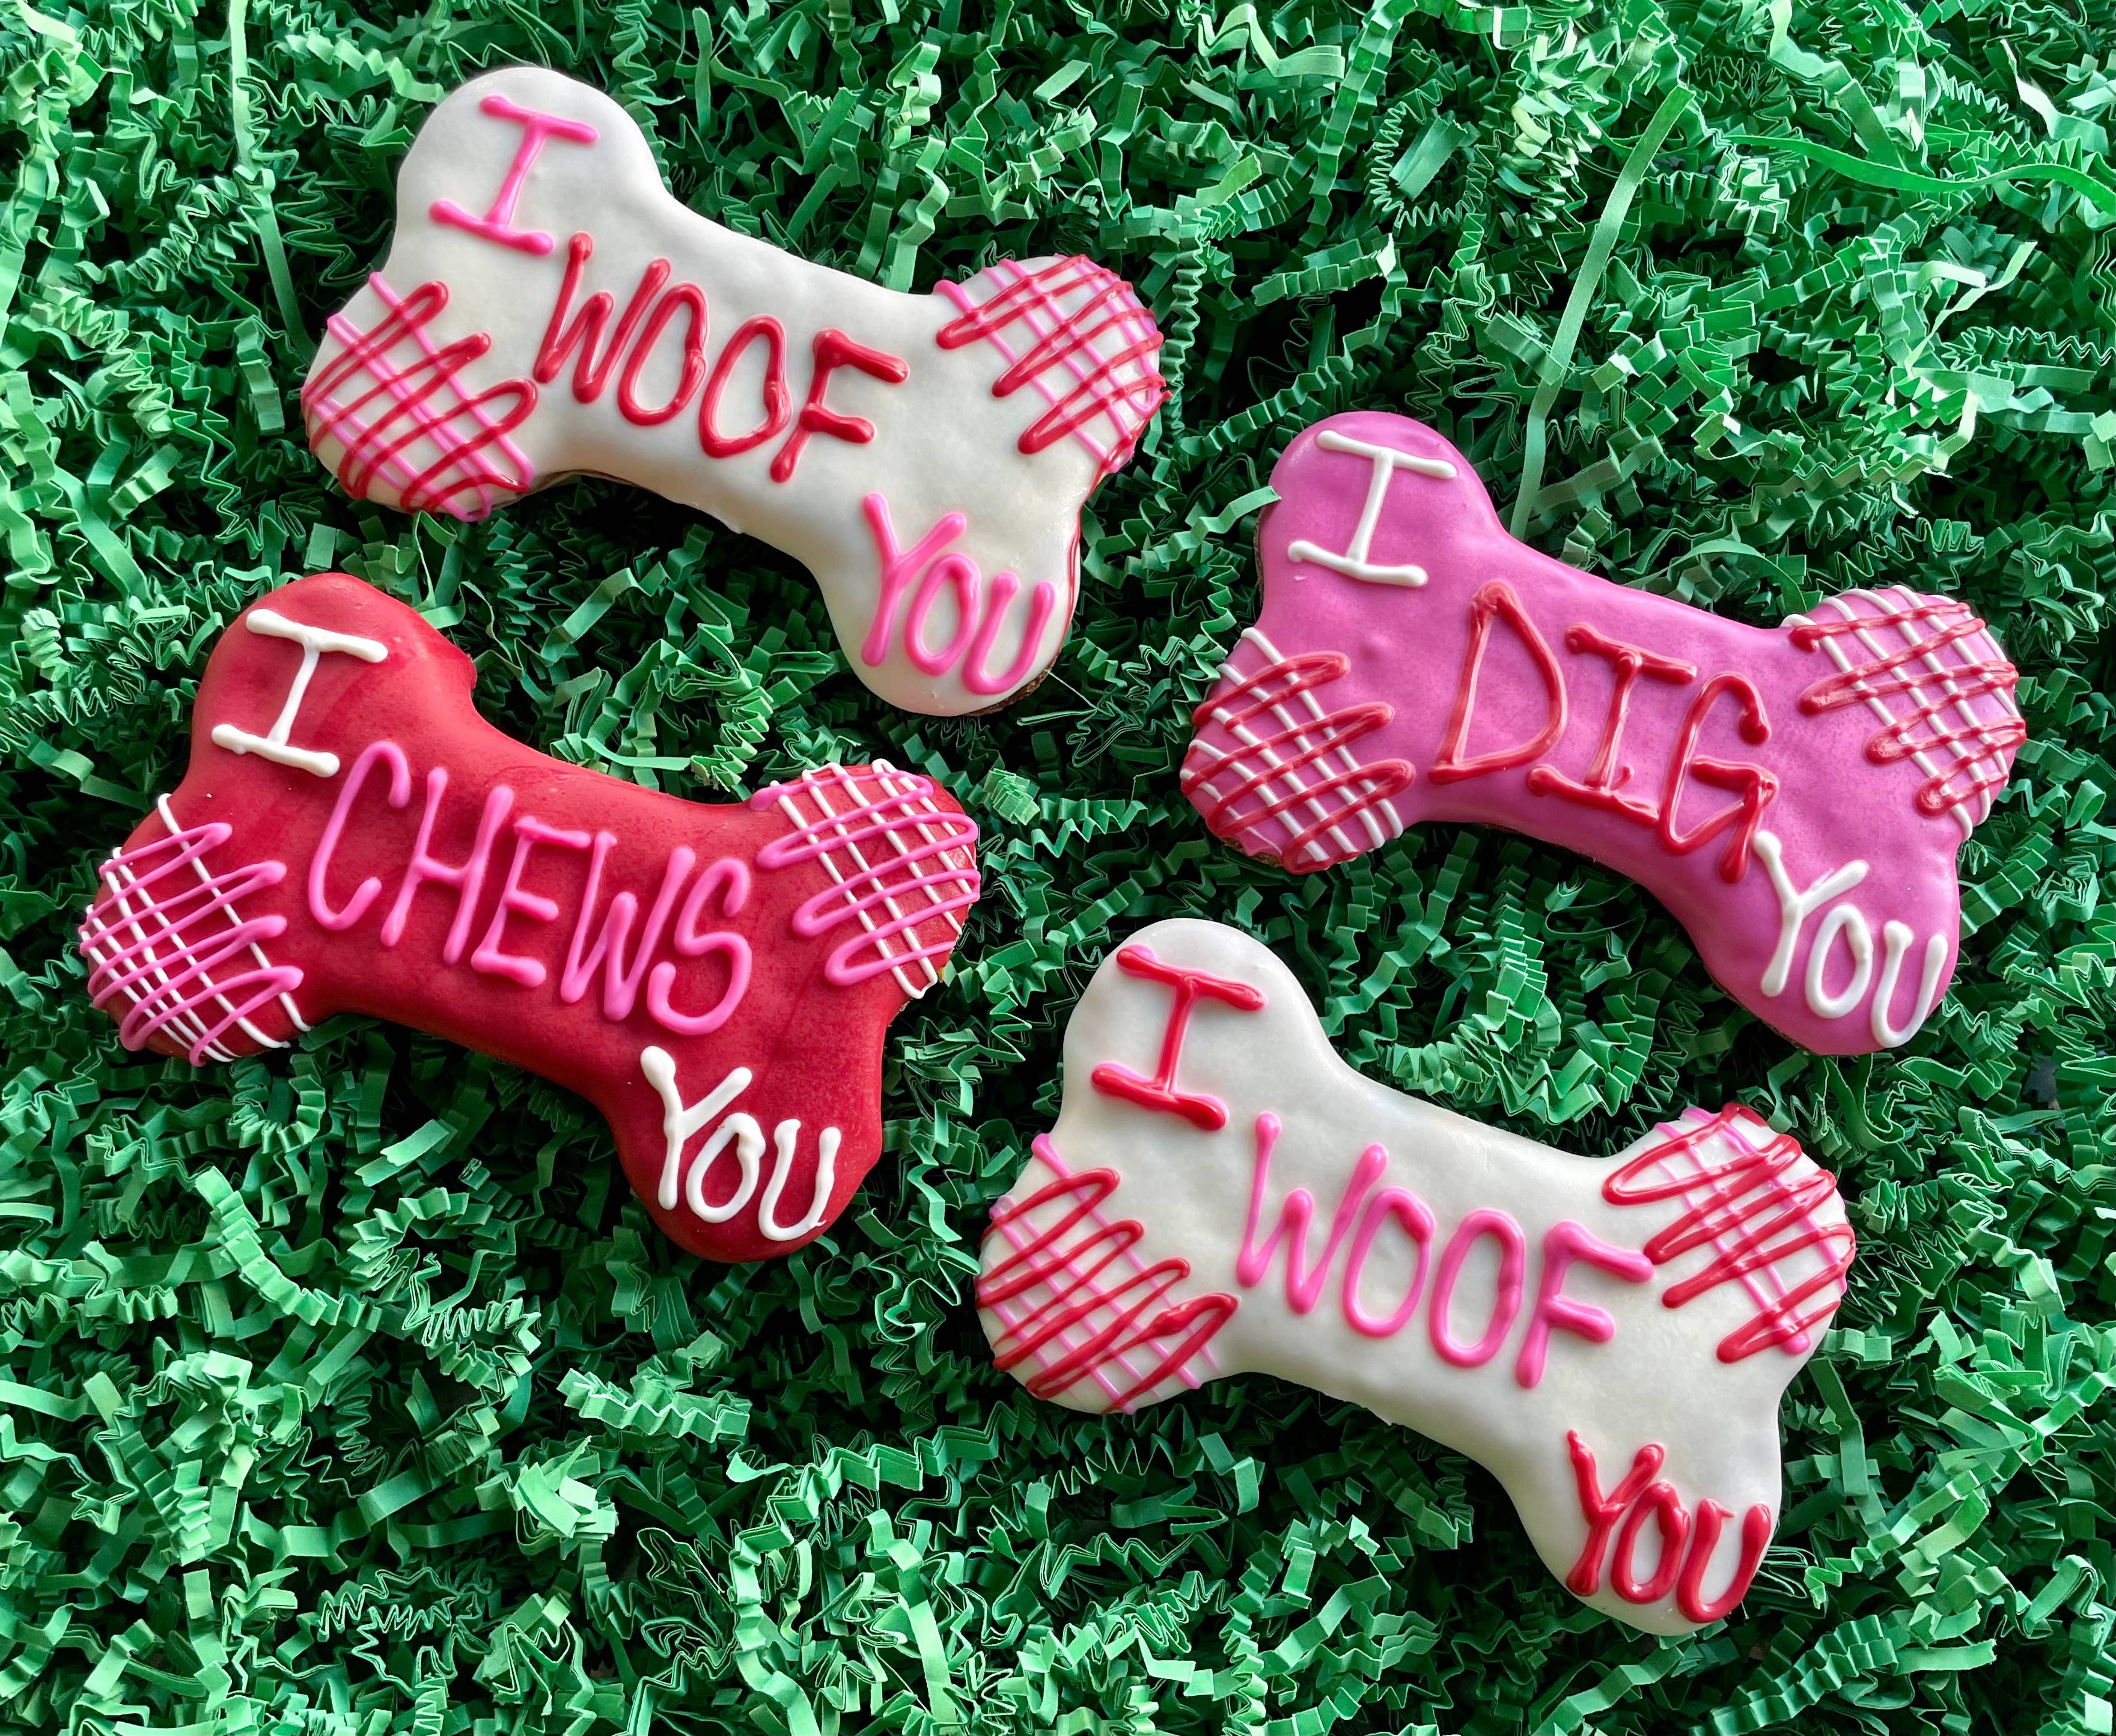 YumYum4DOGS - Assorted Valentine 6 inch dog treats